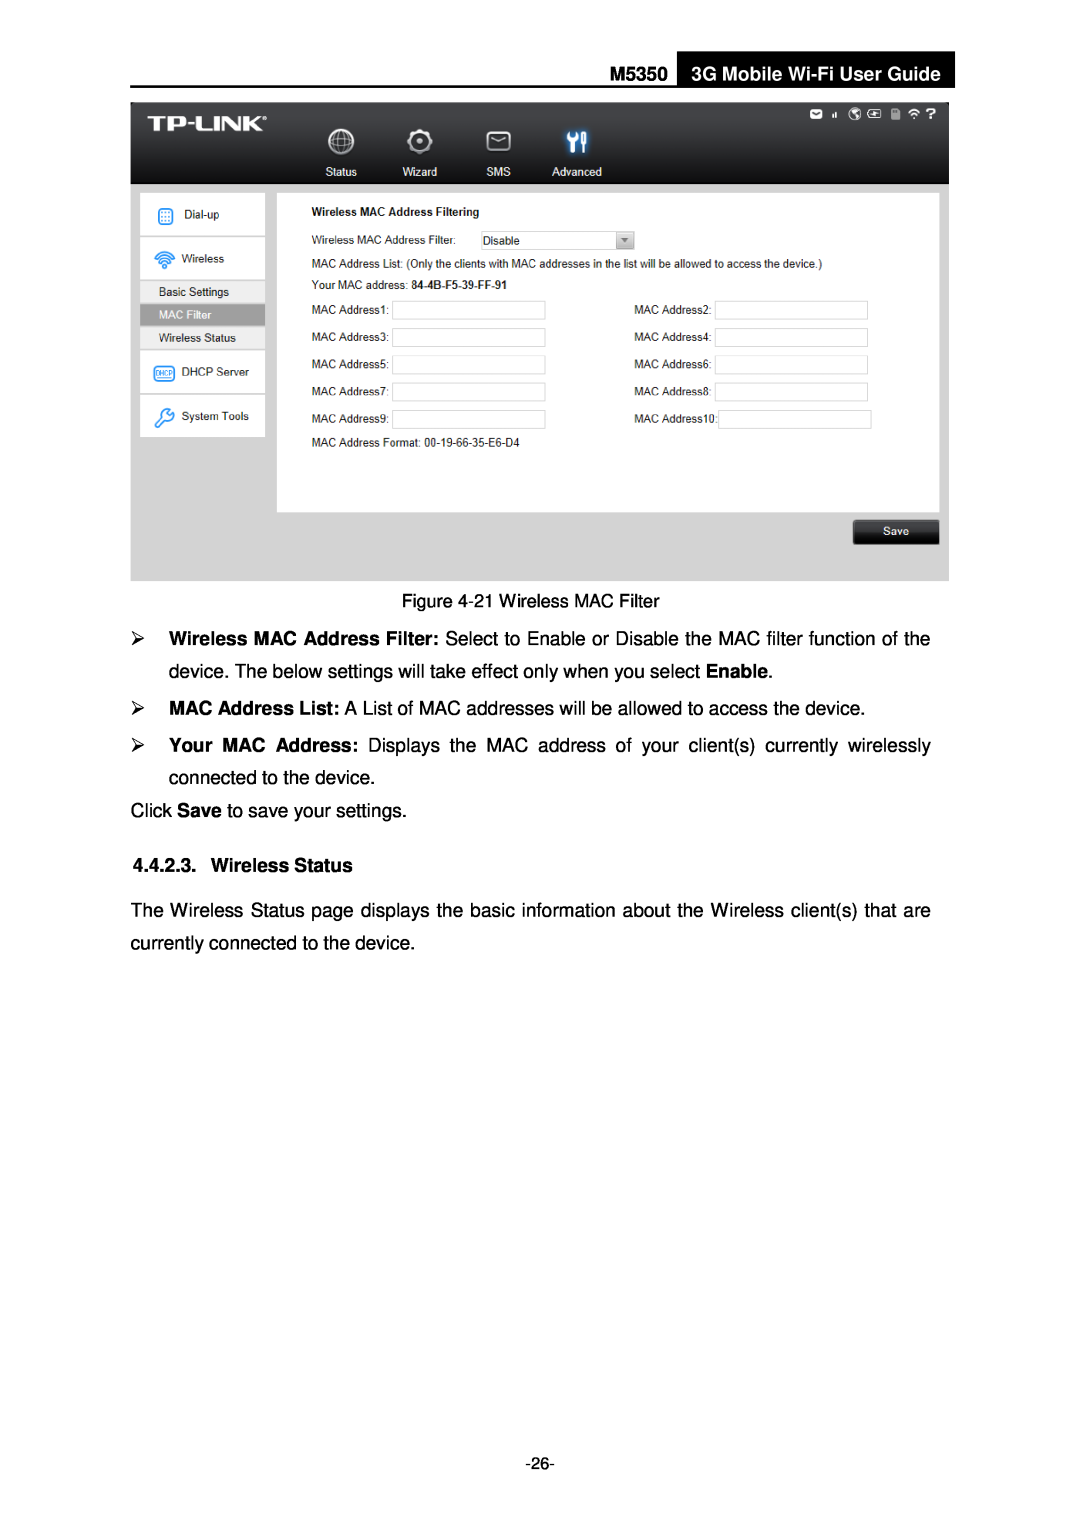 TP-Link manual M5350 3G Mobile Wi-Fi User Guide, Wireless Status, 21 Wireless MAC Filter 